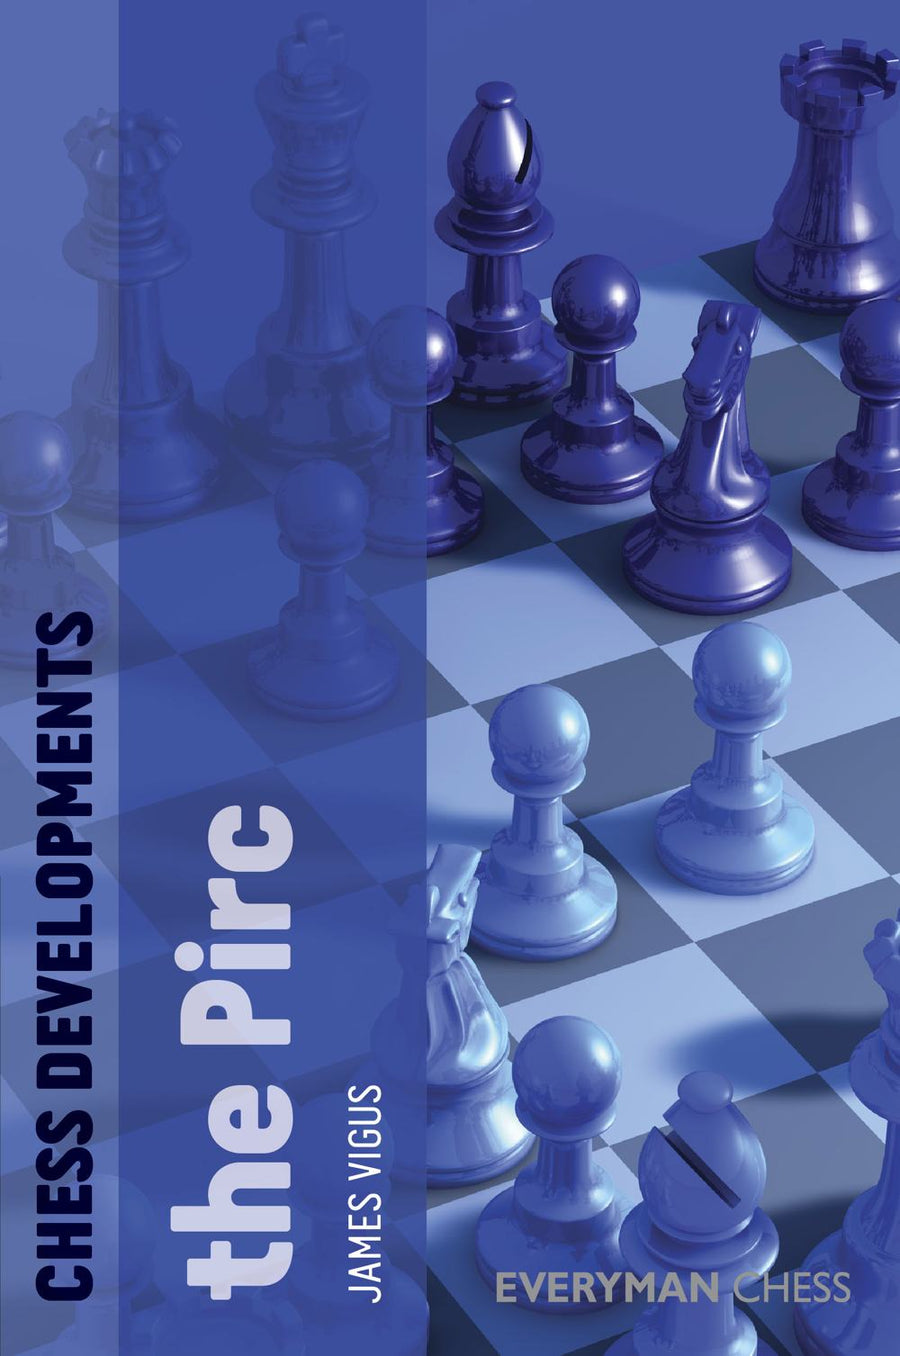 Pirc Defense for Black - Chess Lessons 